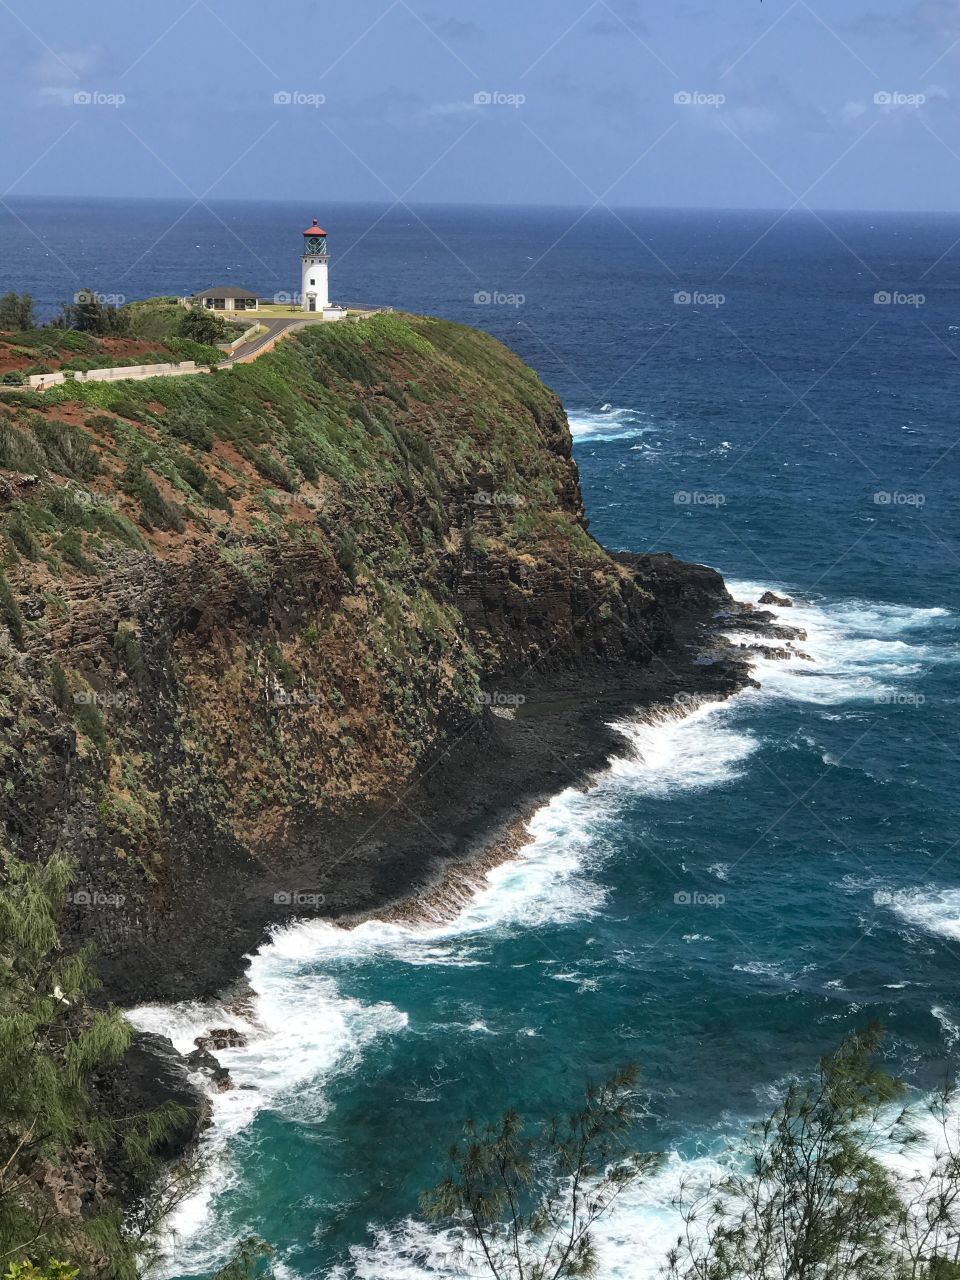 Hawaiian Lighthouse